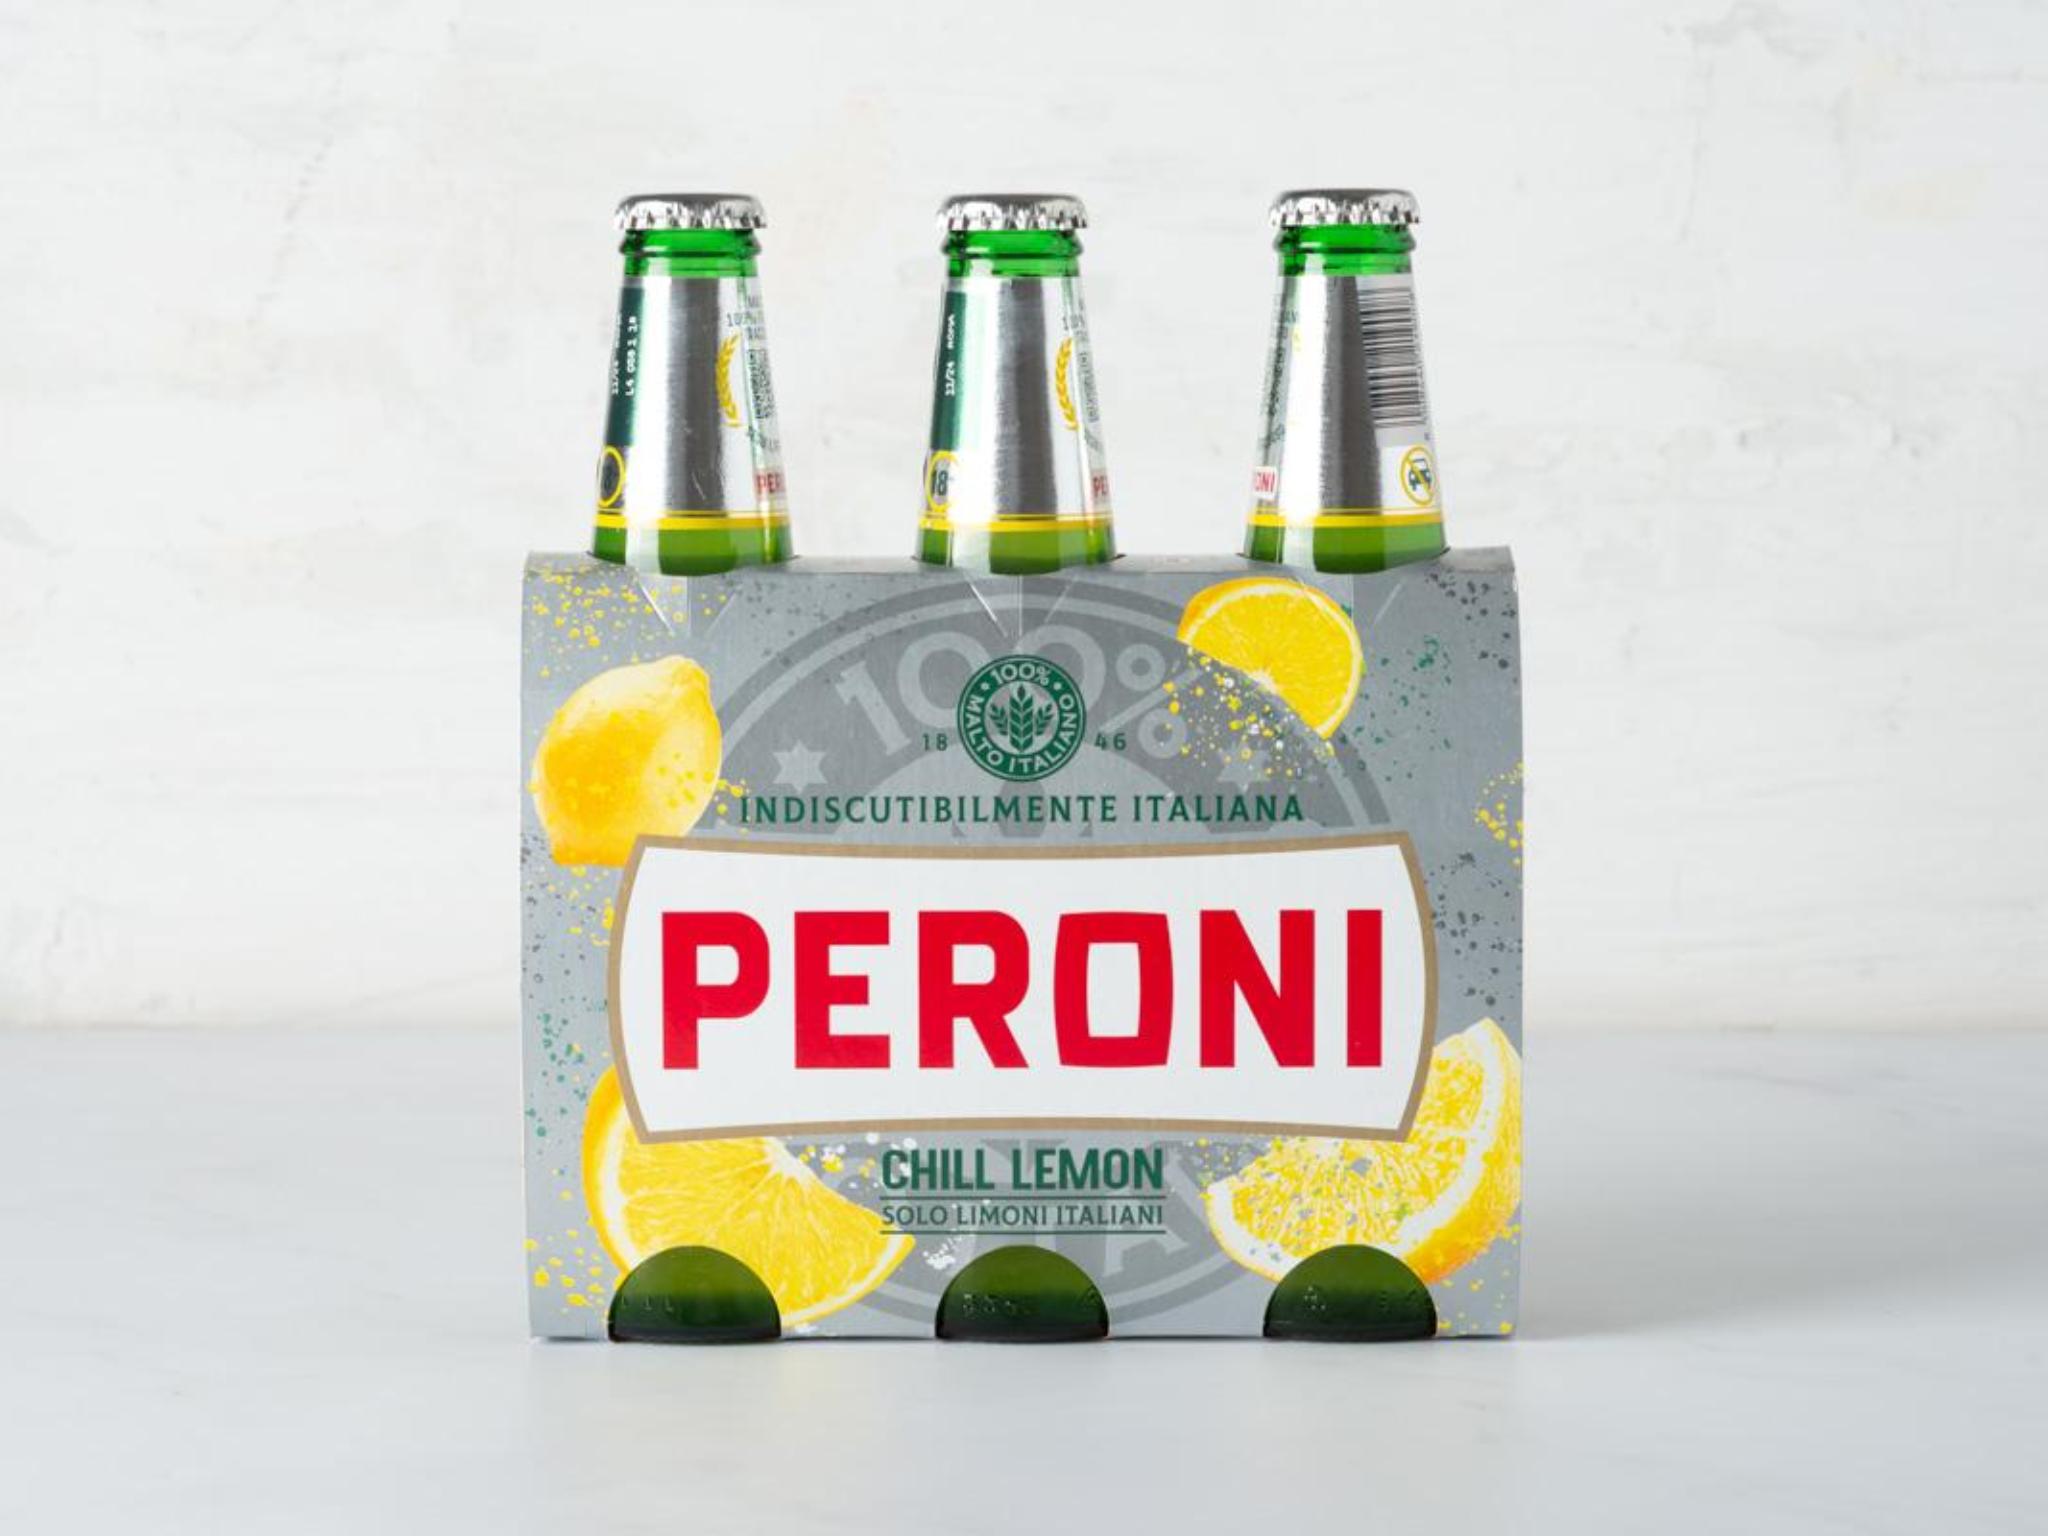 3 Birra Peroni chill lemon